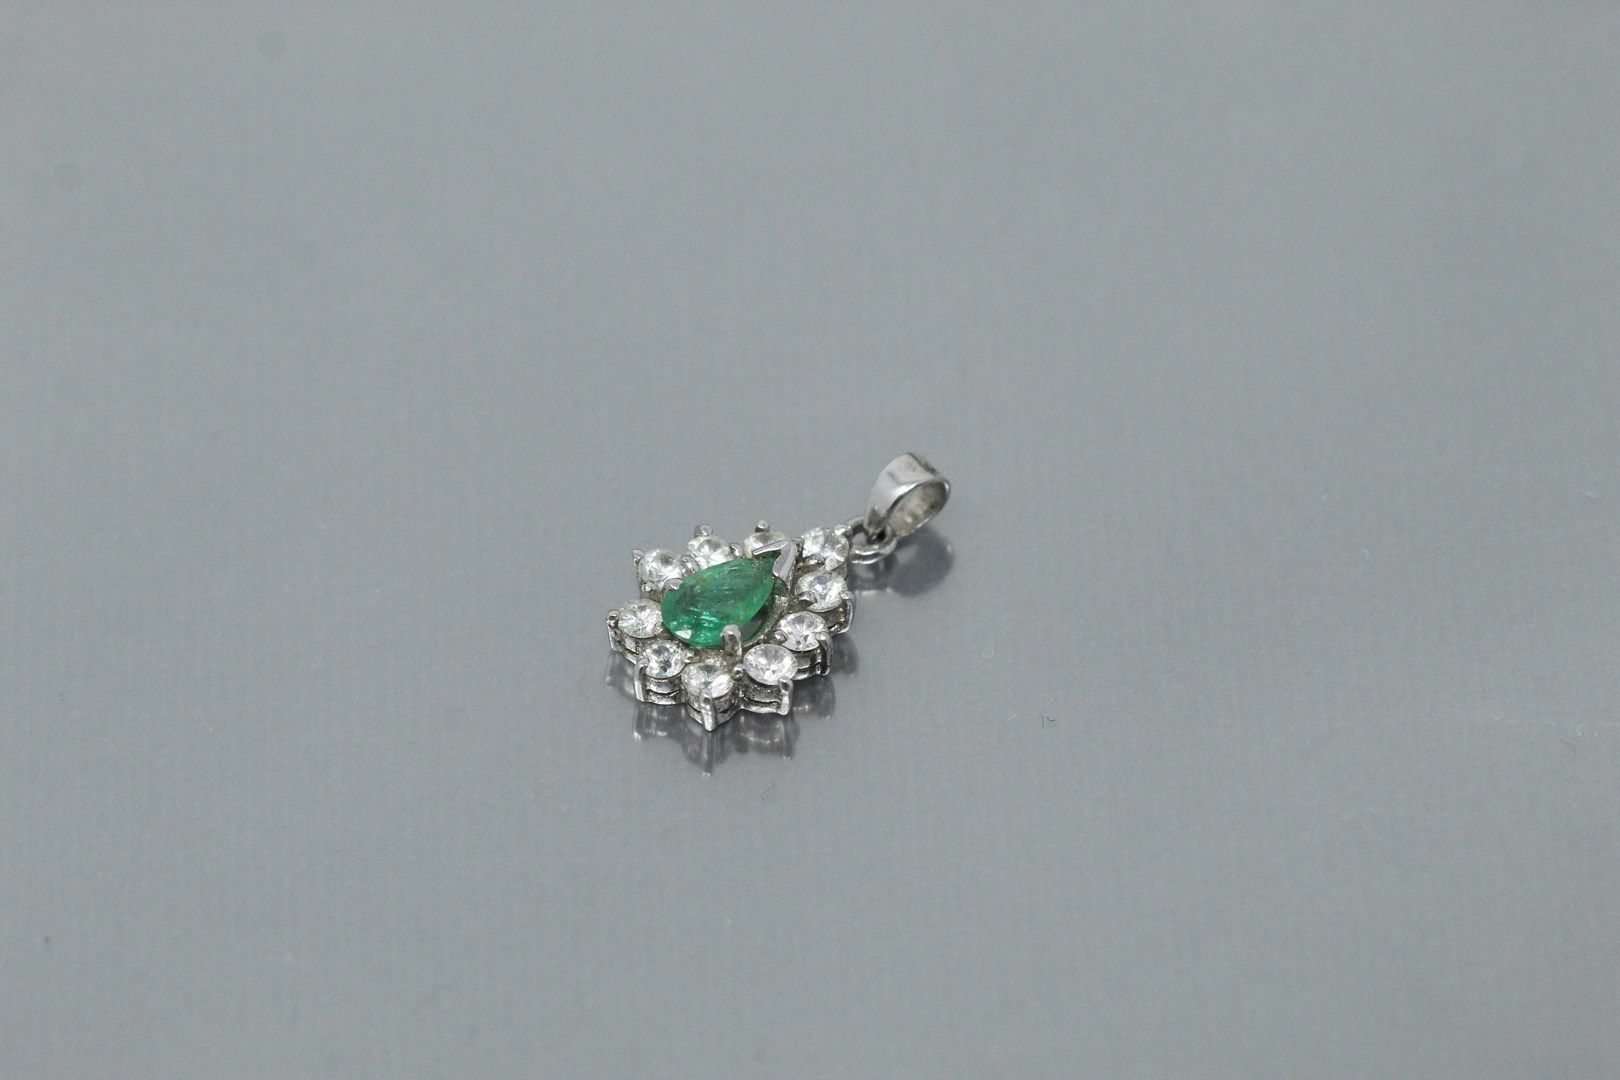 Null 9k(375)白金吊坠，镶嵌着一颗绿宝石，周围是白色的石头。

毛重：2.12克。